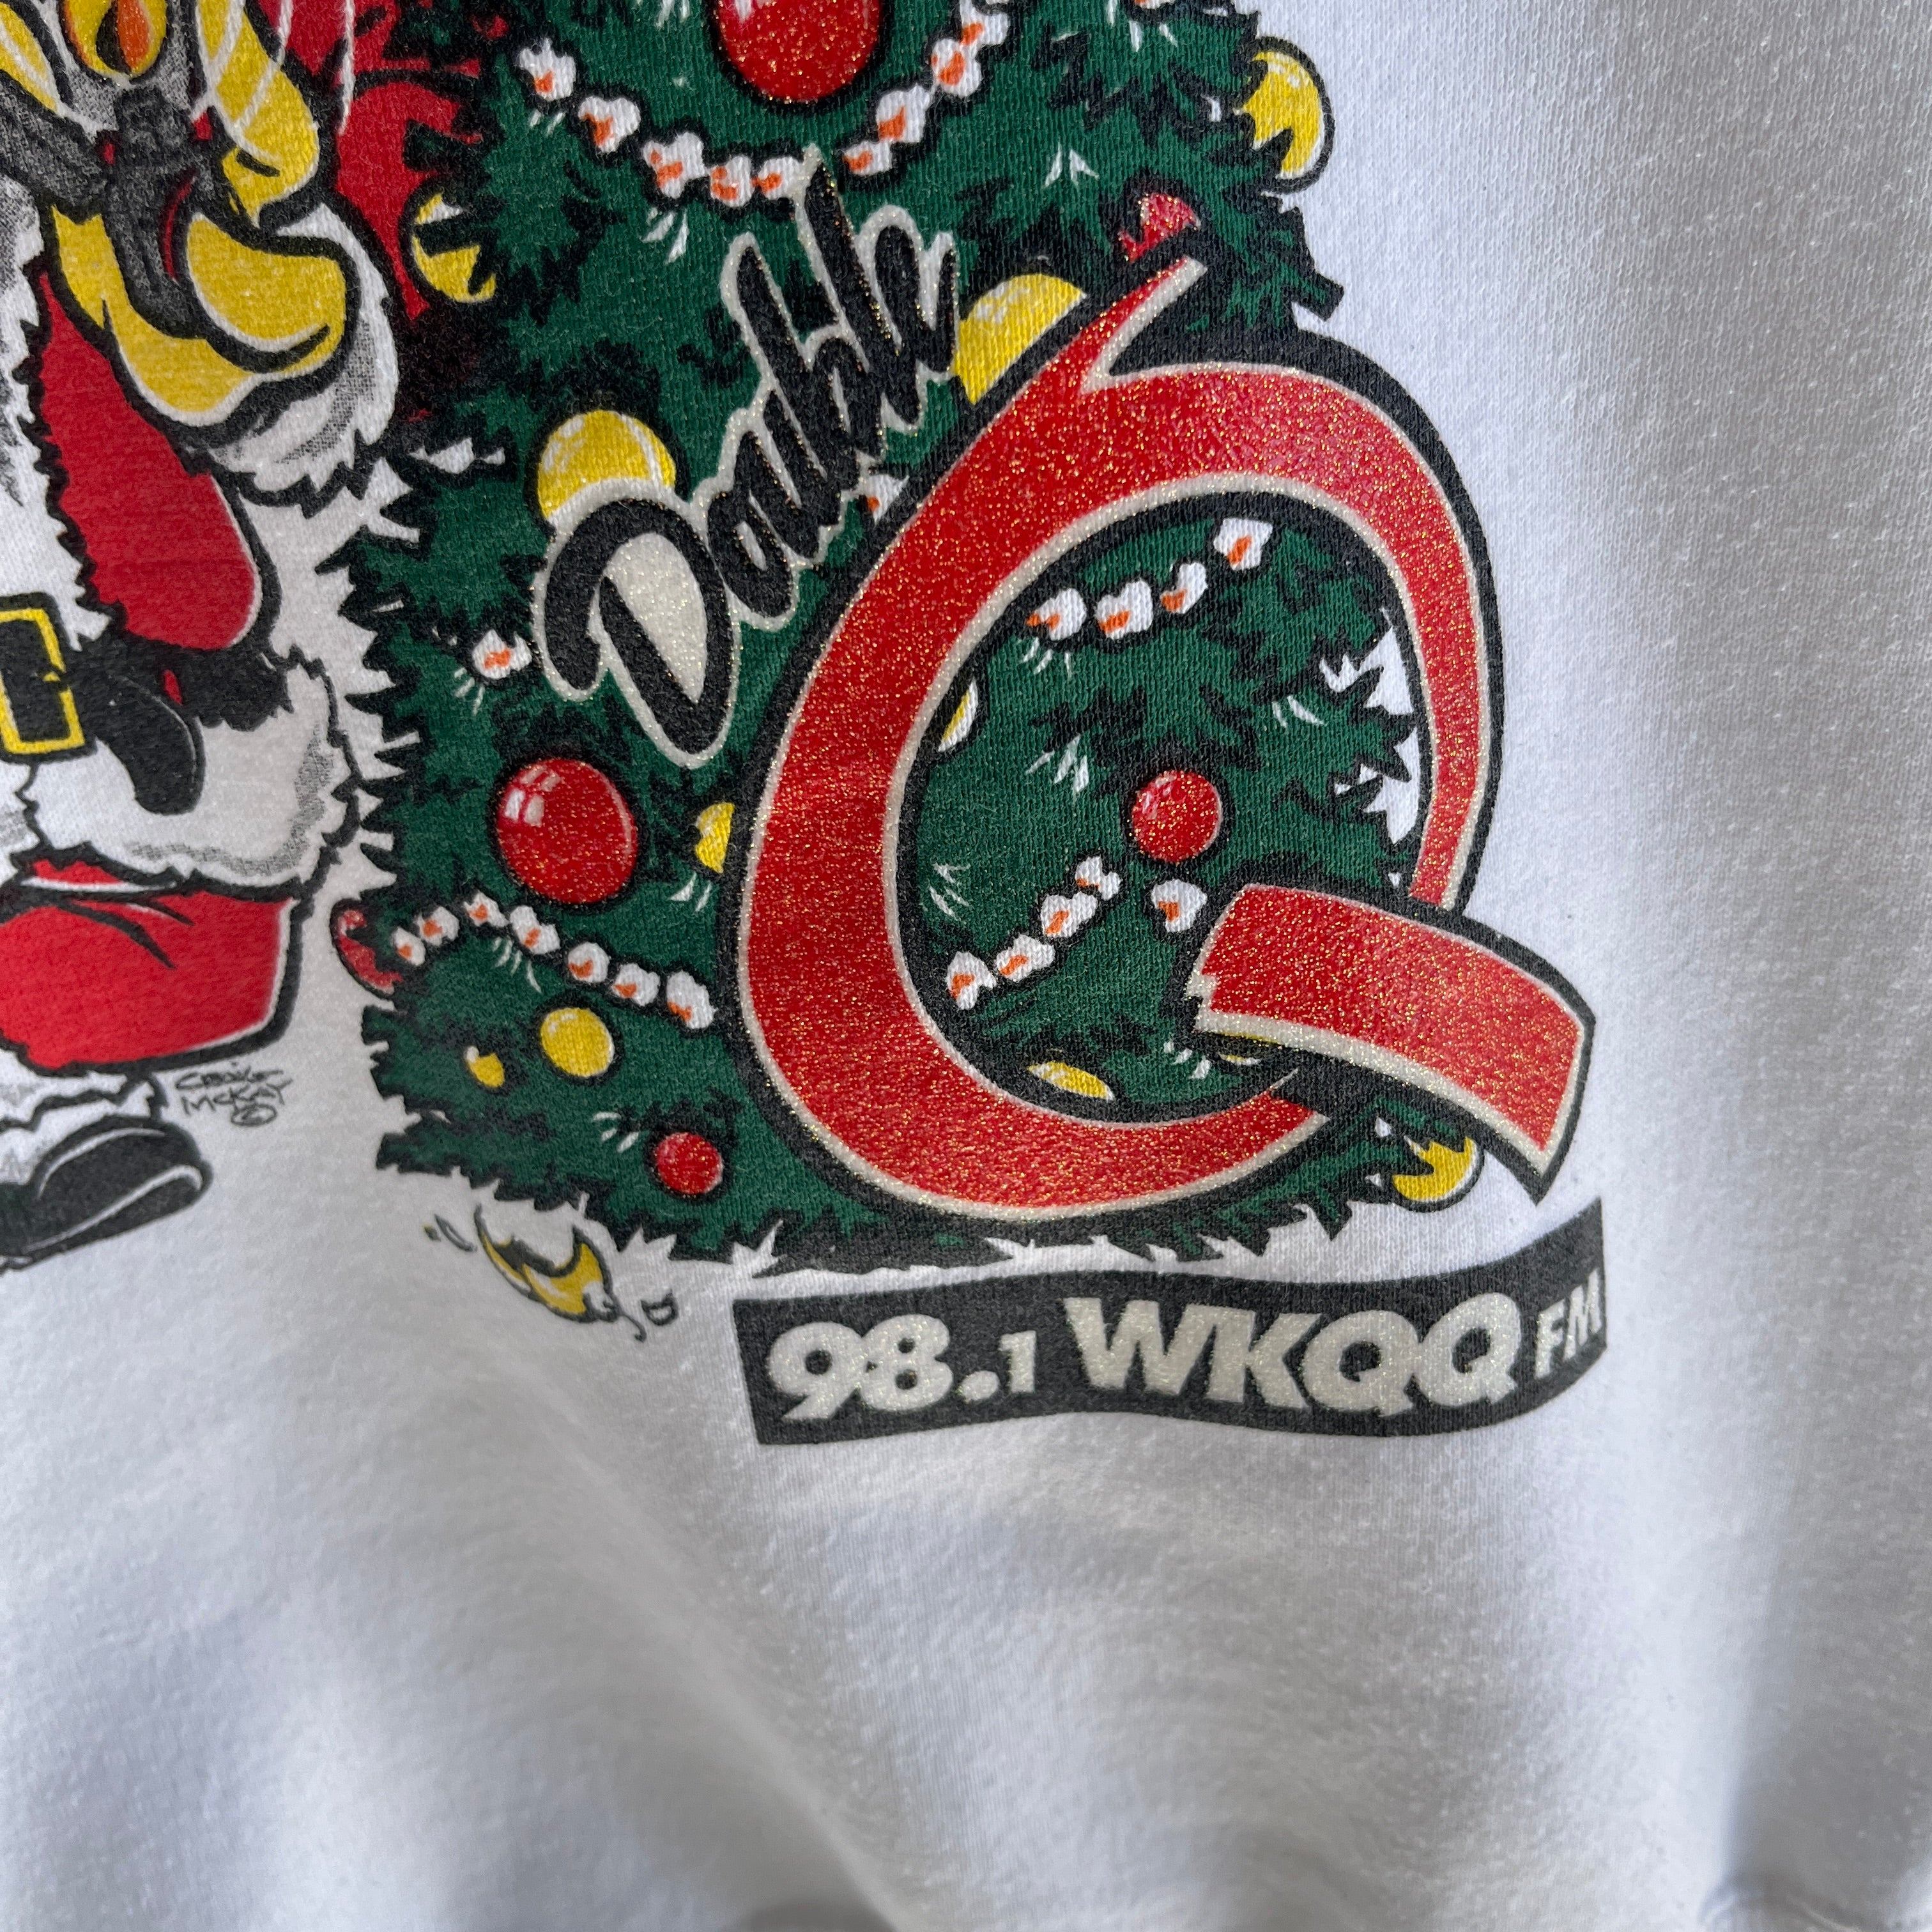 1980s 98.1 WKQQ FM Kentucky's Rock Station Derelict Santa Sweatshirt